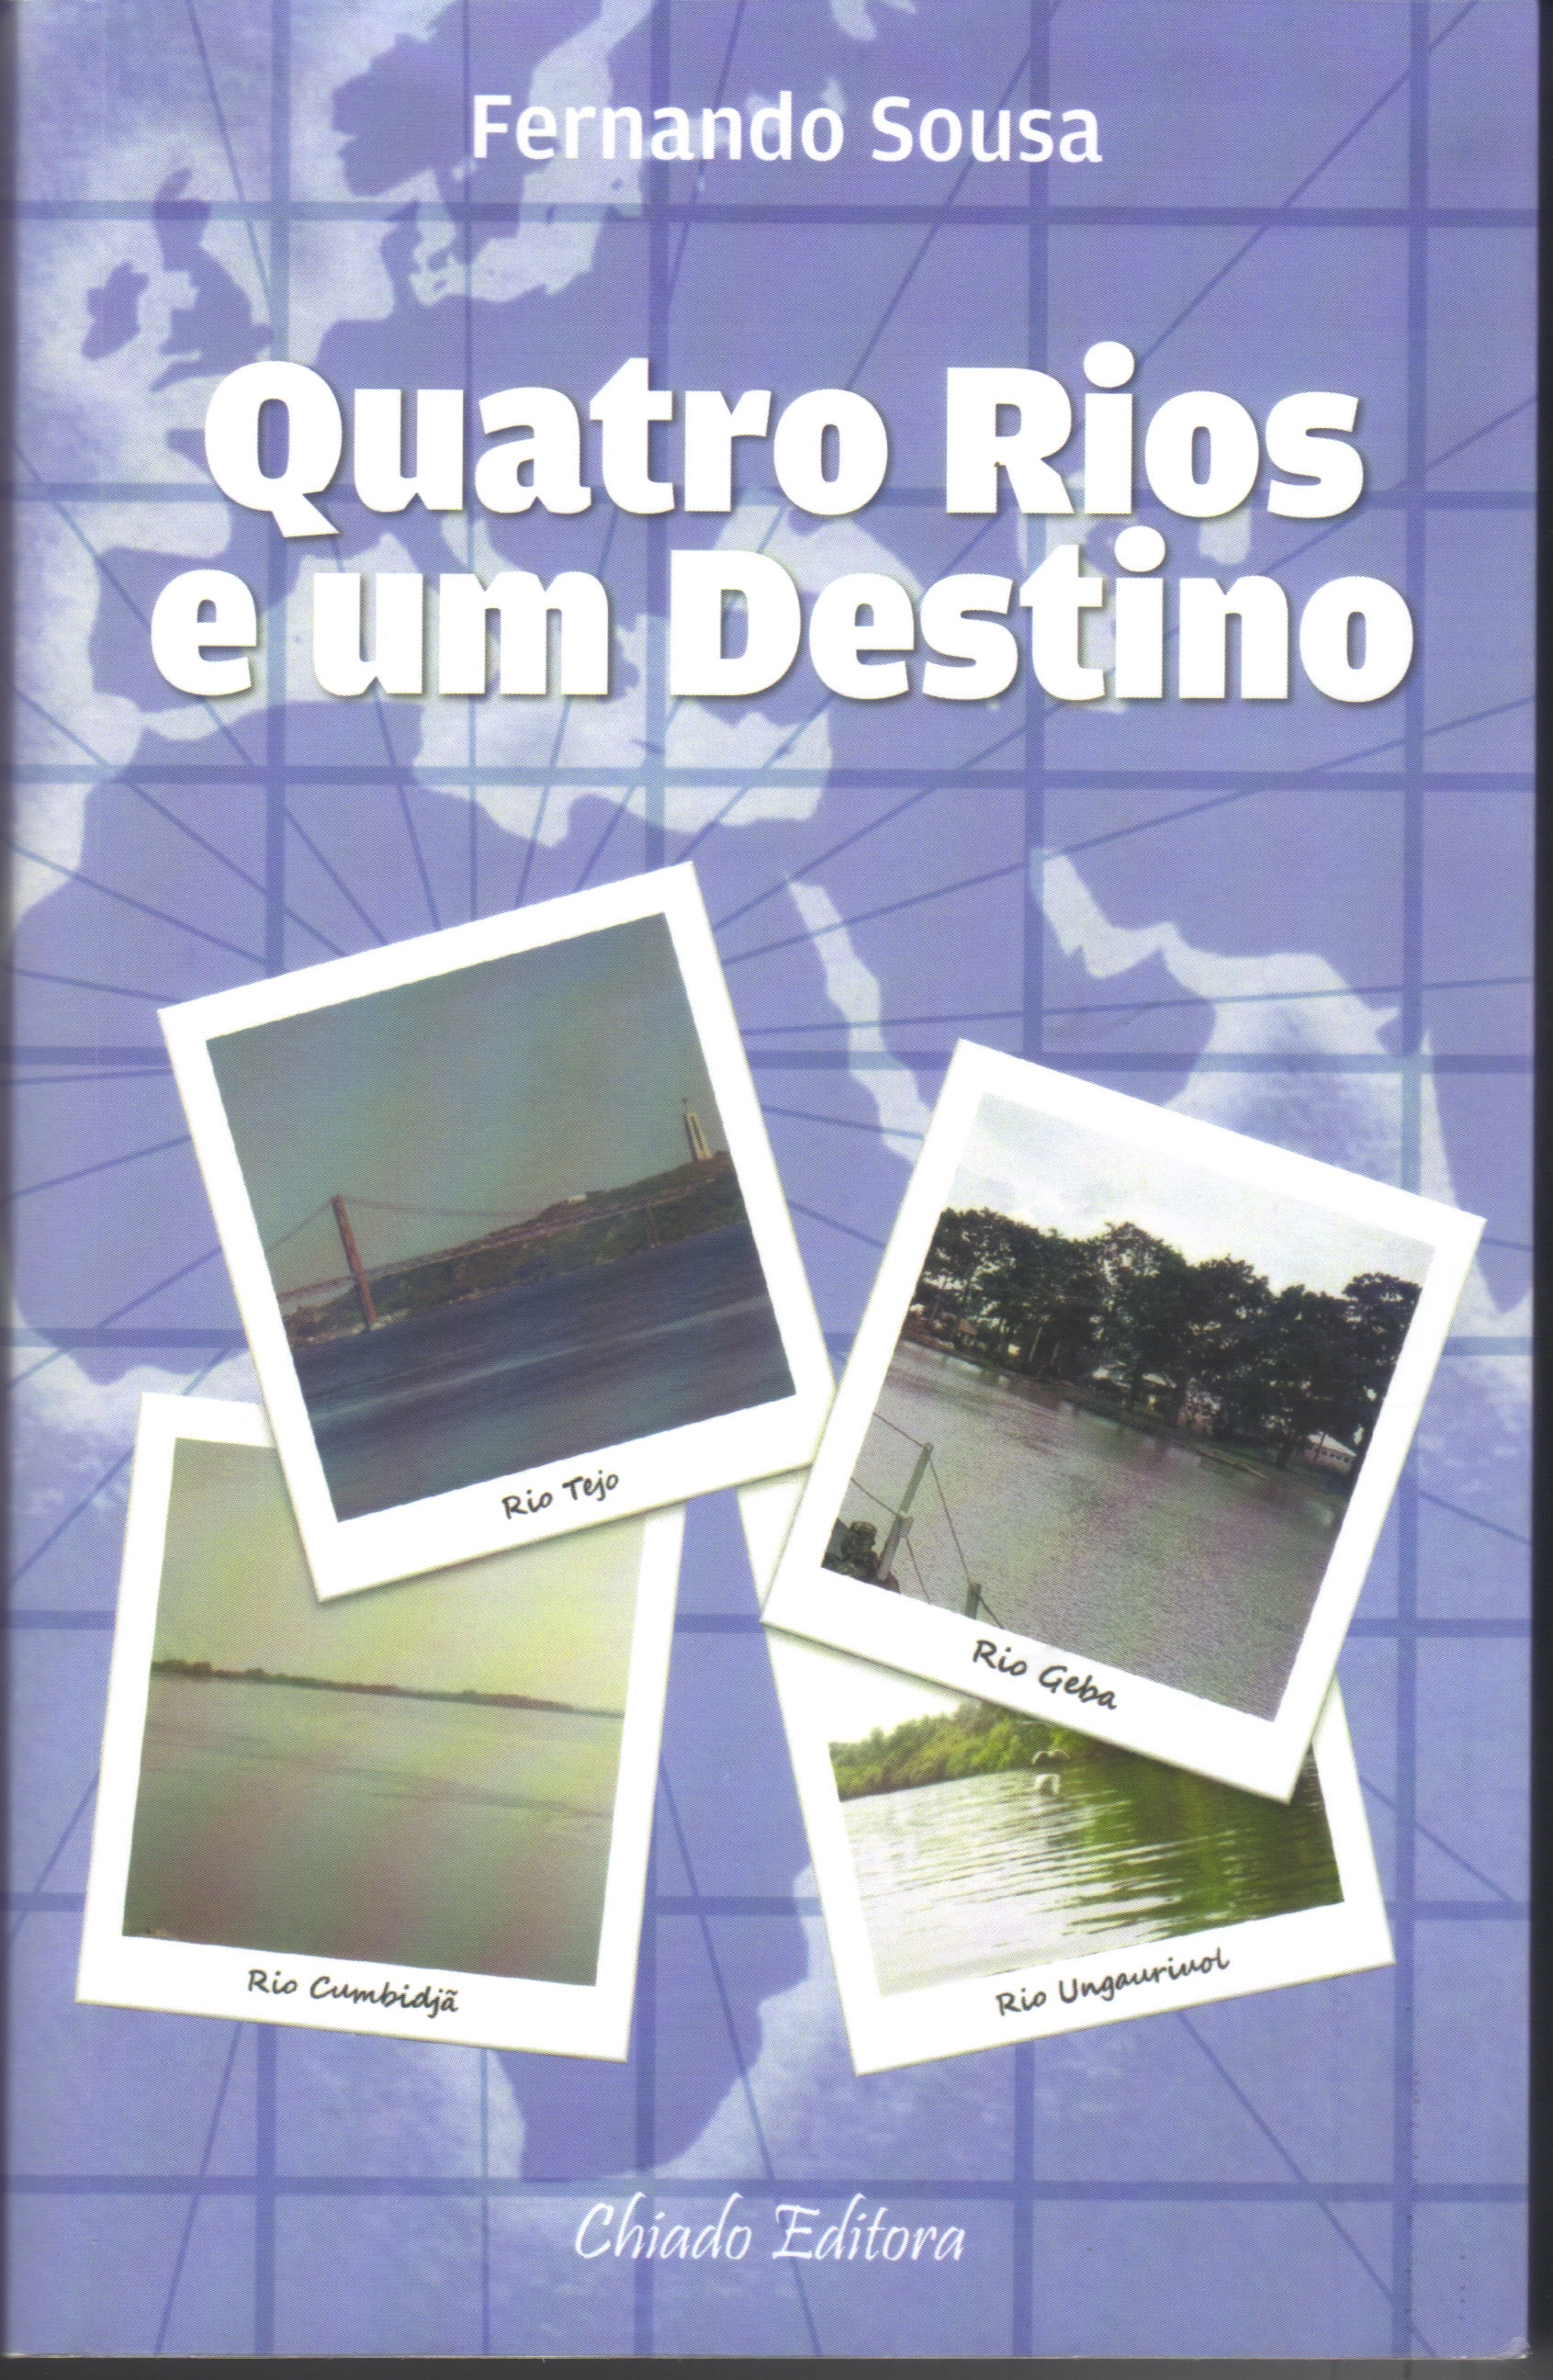 Livro de Fernando Sousa Capa